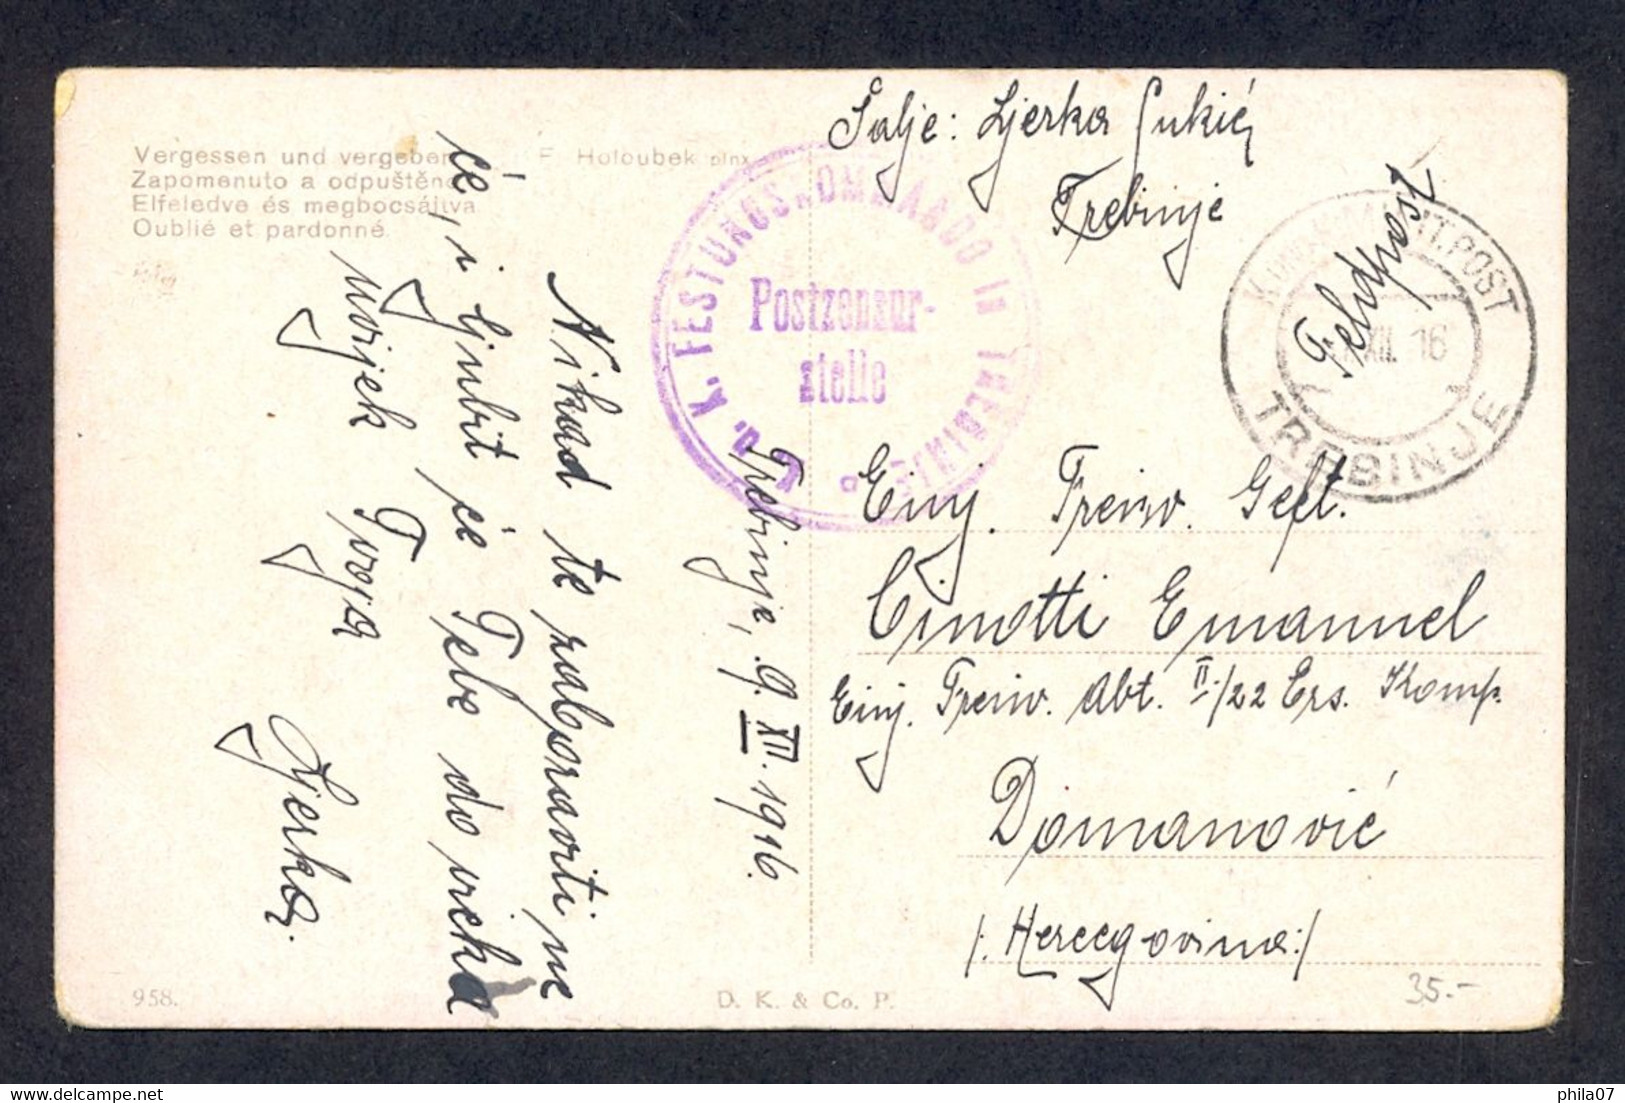 BOSNIA AND HERZEGOVINA - Greeting Card Sent From Trebinje To Domanović 09.12. 1916. Cancel FESTUNGSKOMANNDO IN TREBINJE - Bosnie-Herzegovine